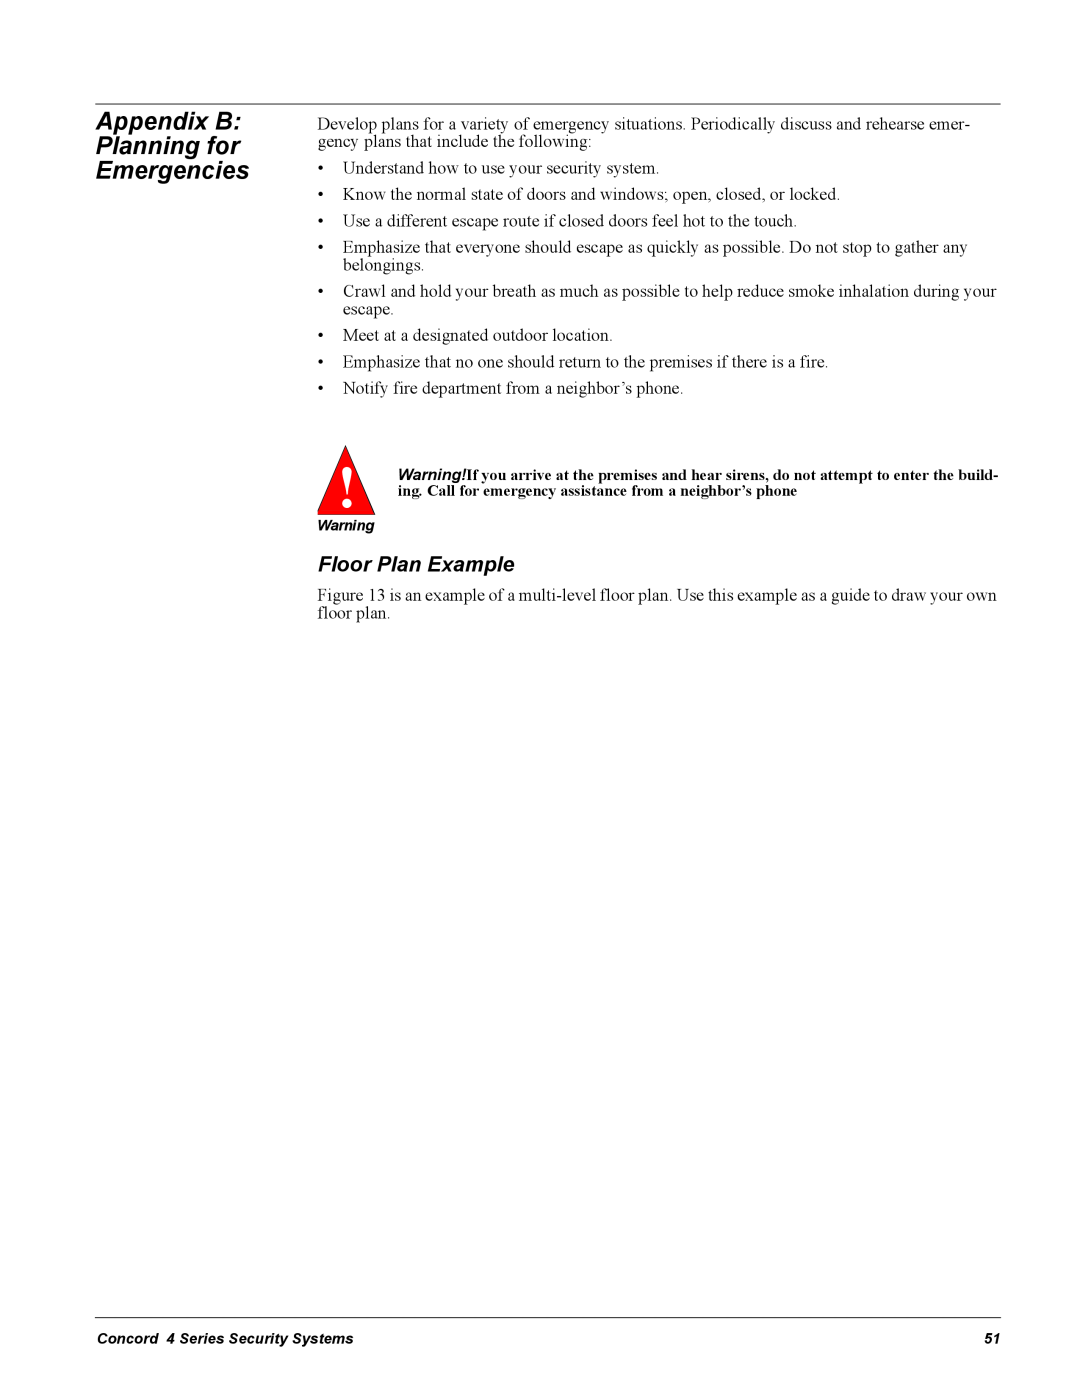 GE Concord 4 manual Appendix B Planning for Emergencies, Floor Plan Example 